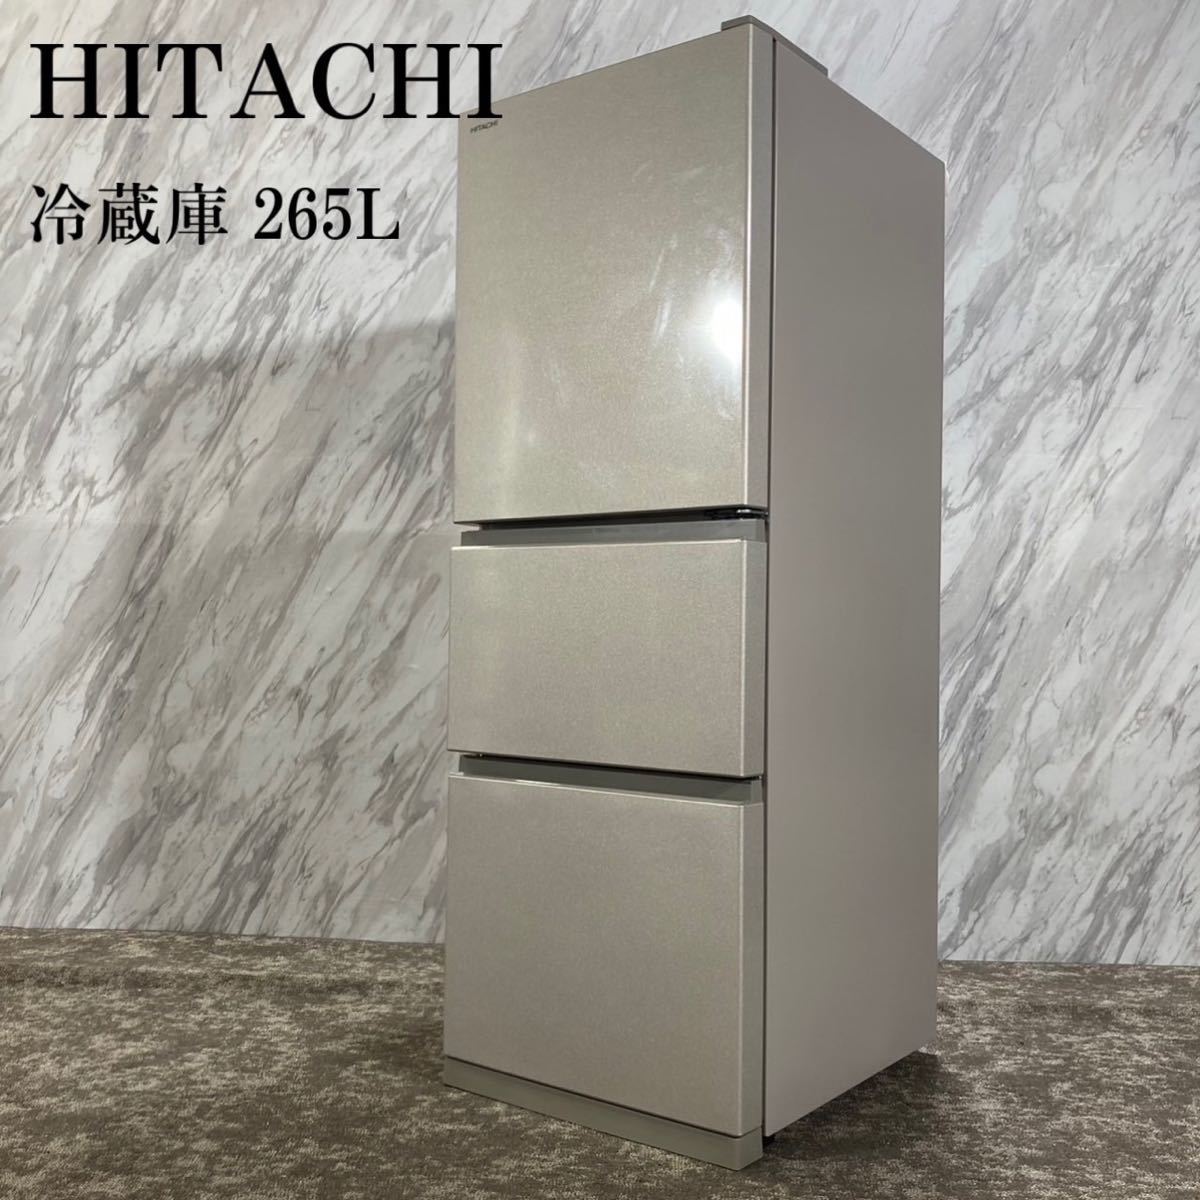 HITACHI 日立 冷蔵庫 R-27KV(T) 265L 2020年 F513-